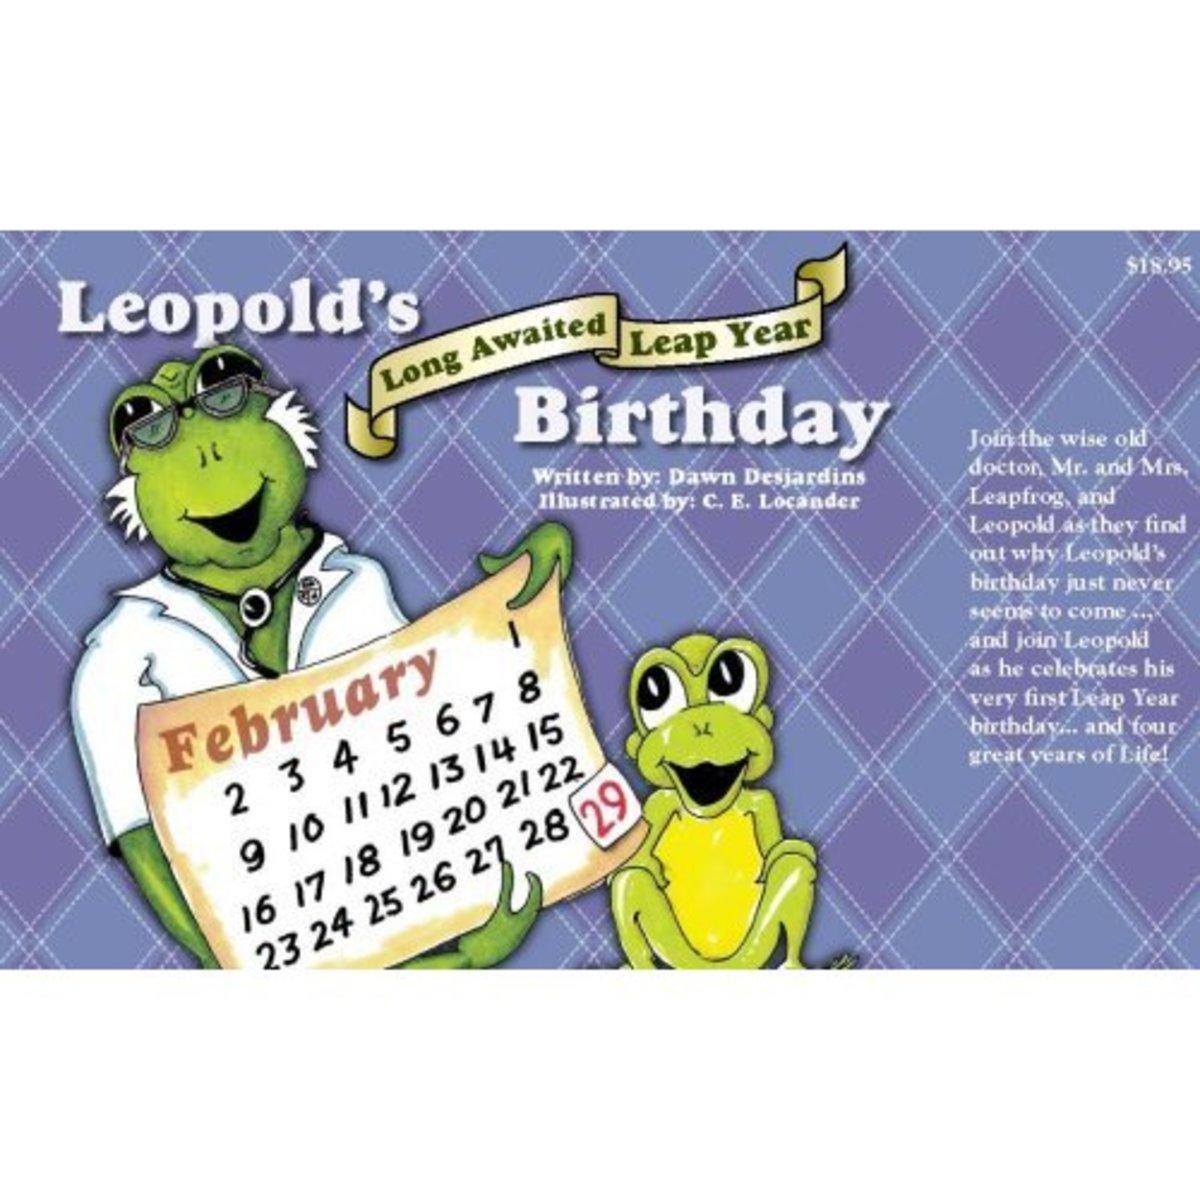 leopolds-leap-year-birthday